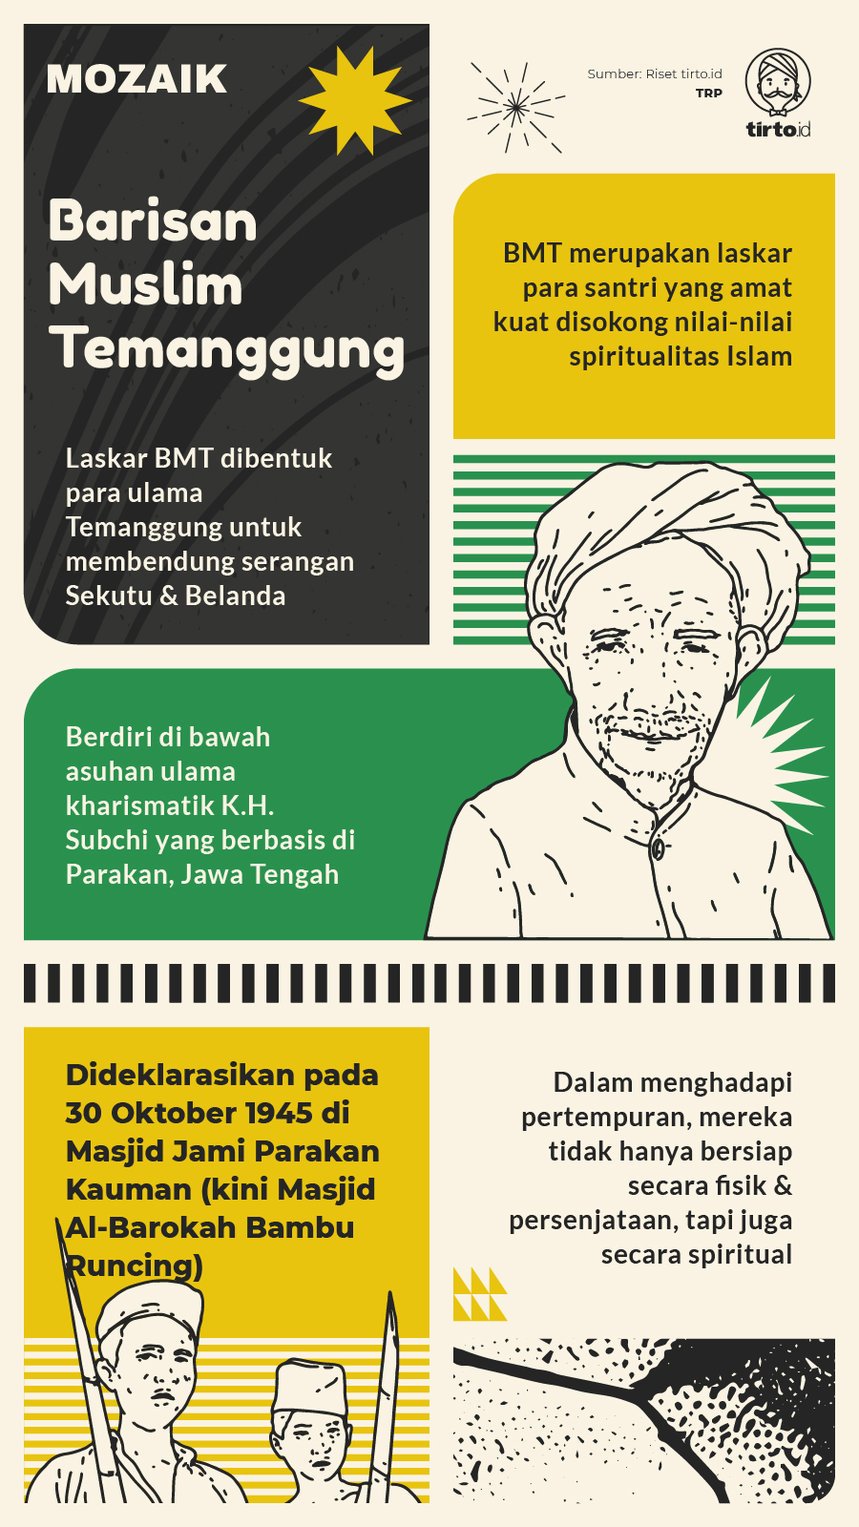 Infografik Mozaik Barisan Muslim Temanggung